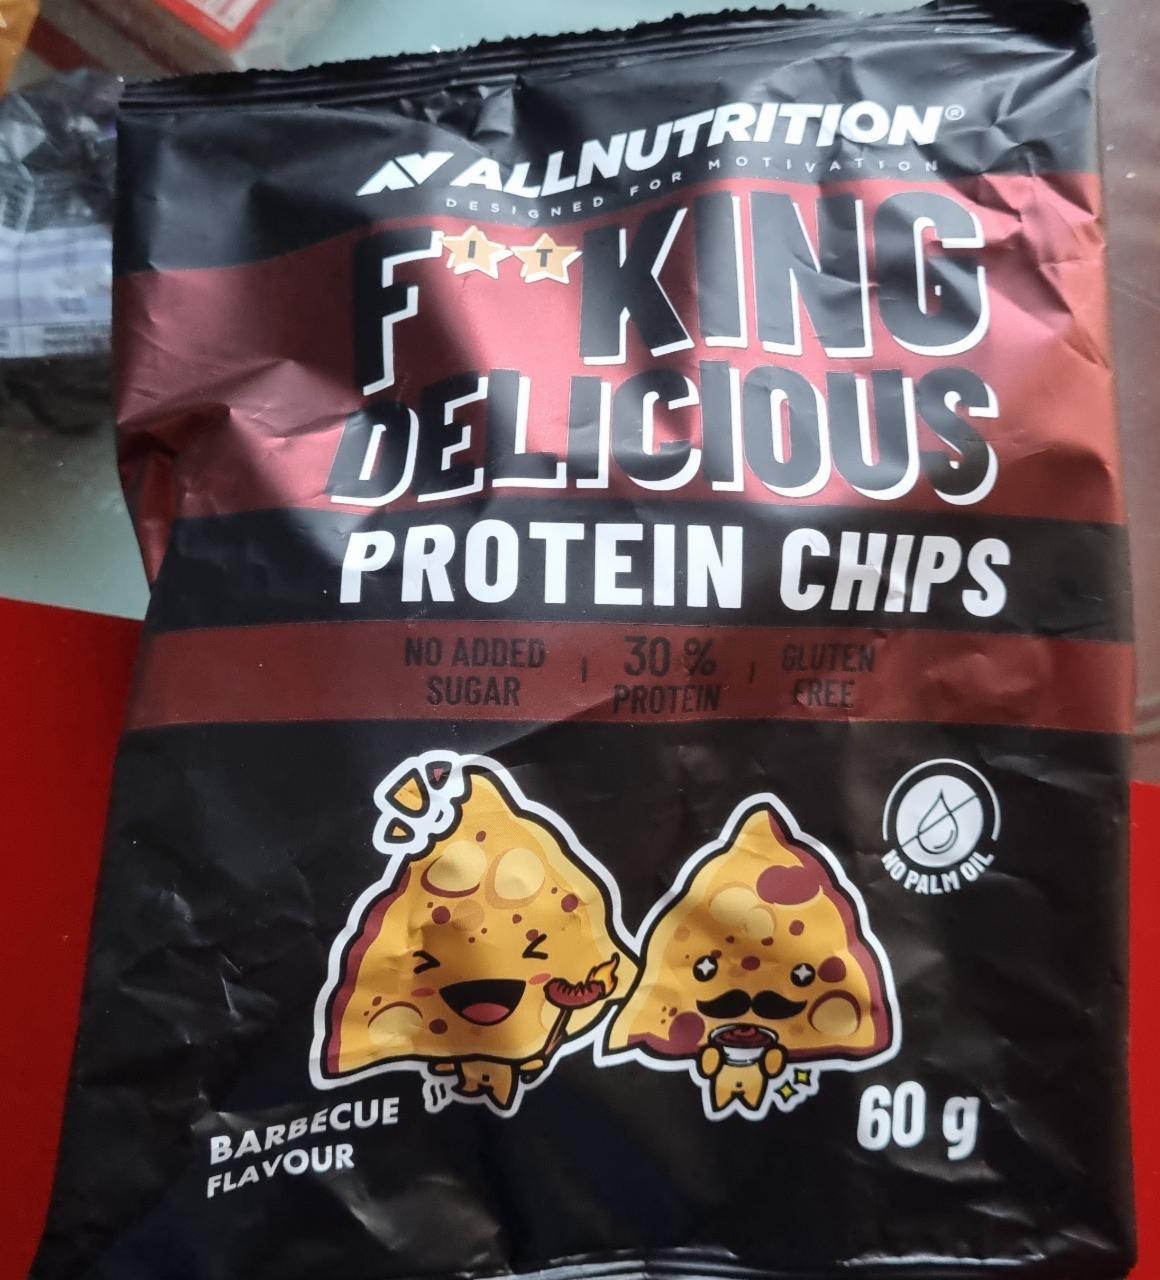 Zdjęcia - Fitking Delicious Protein Chips Barbecue Allnutrition